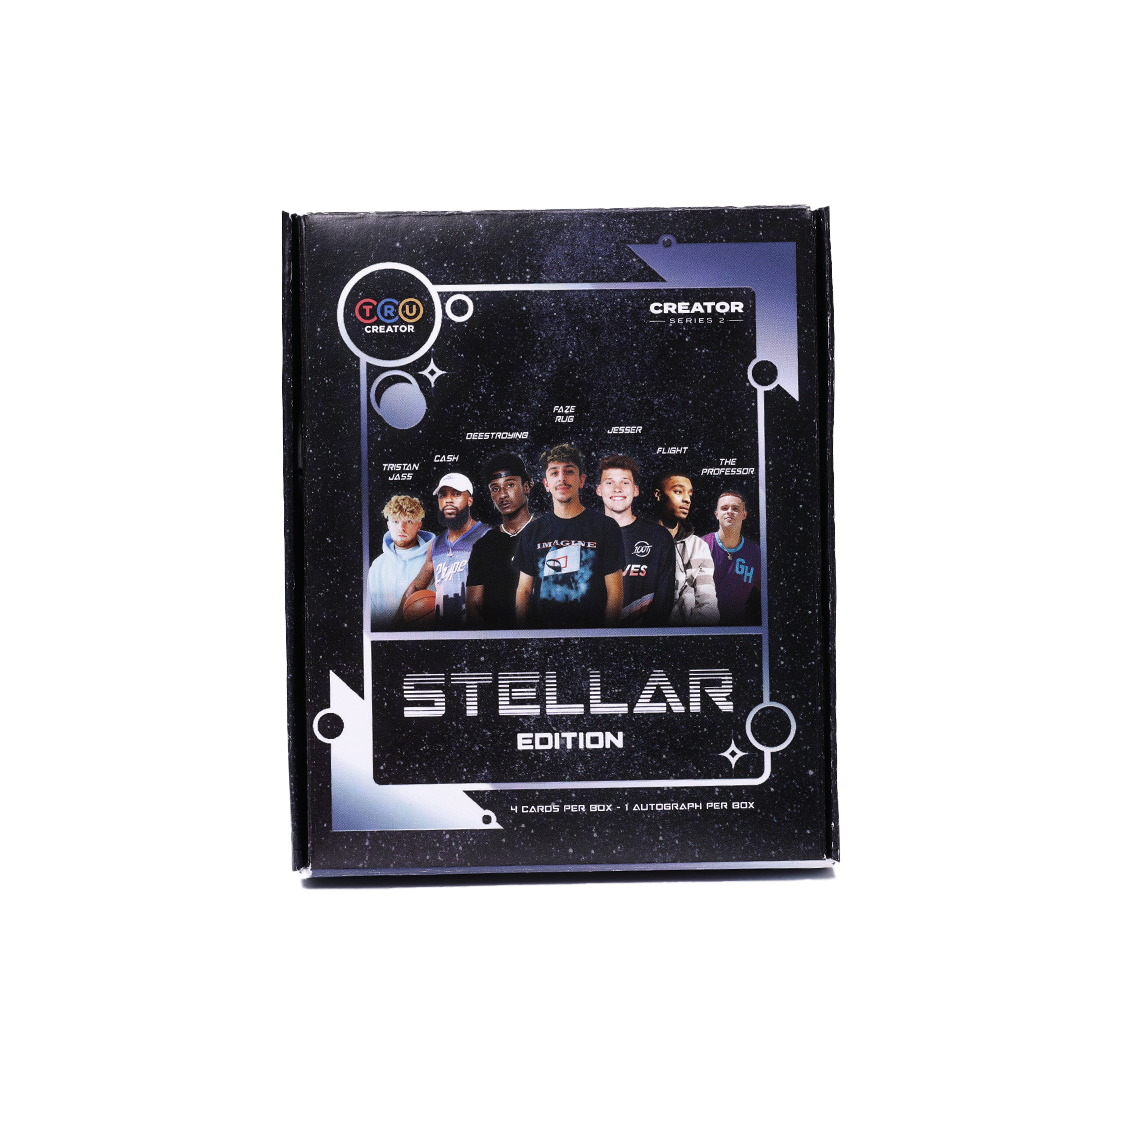 Creator Series 2 - Stellar Edition